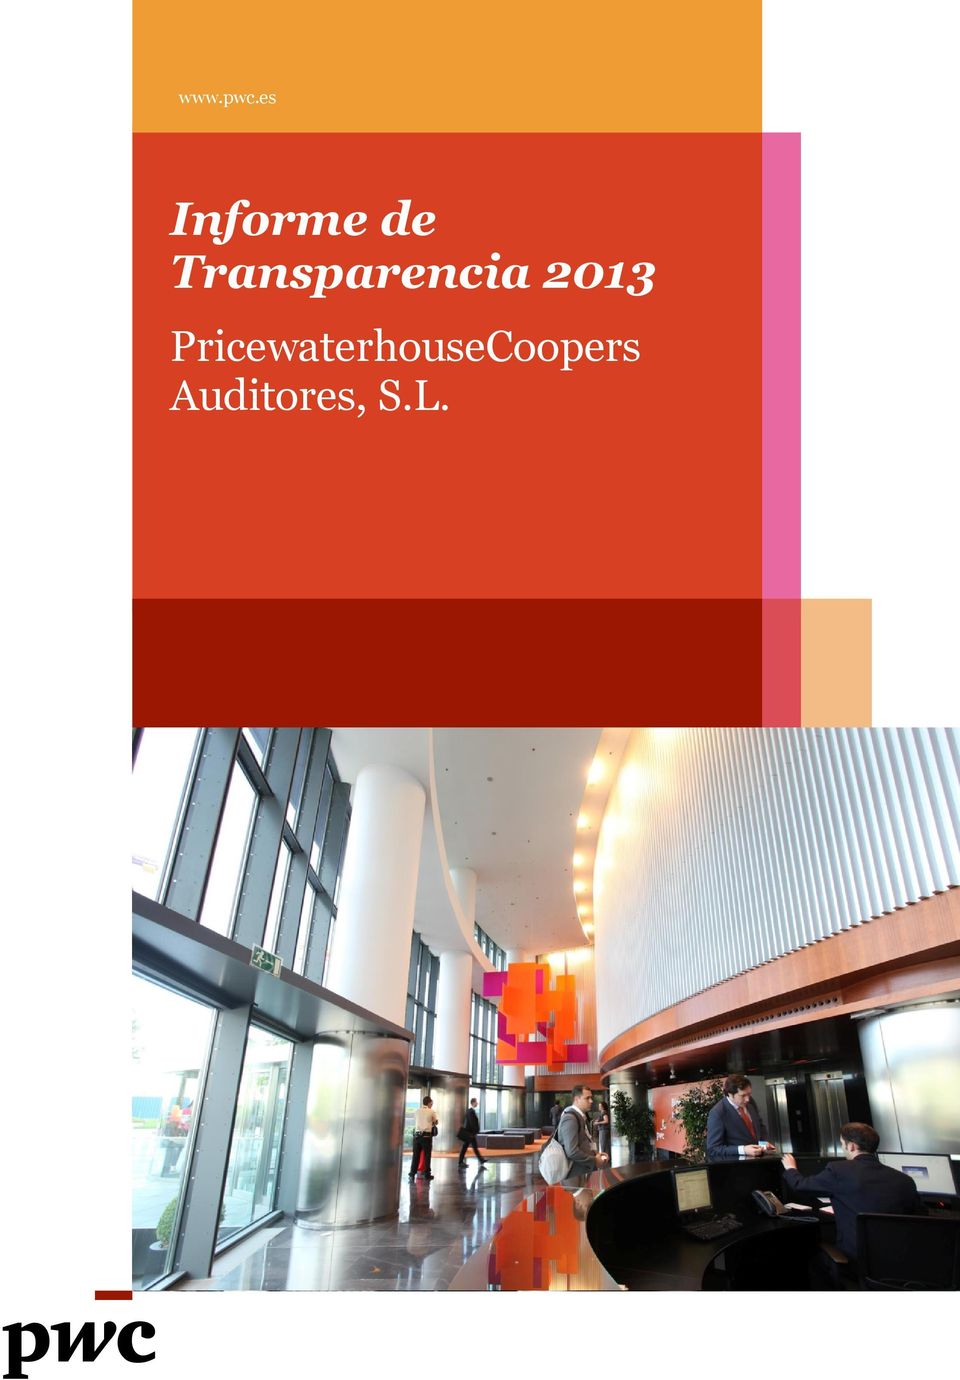 Transparencia 2013